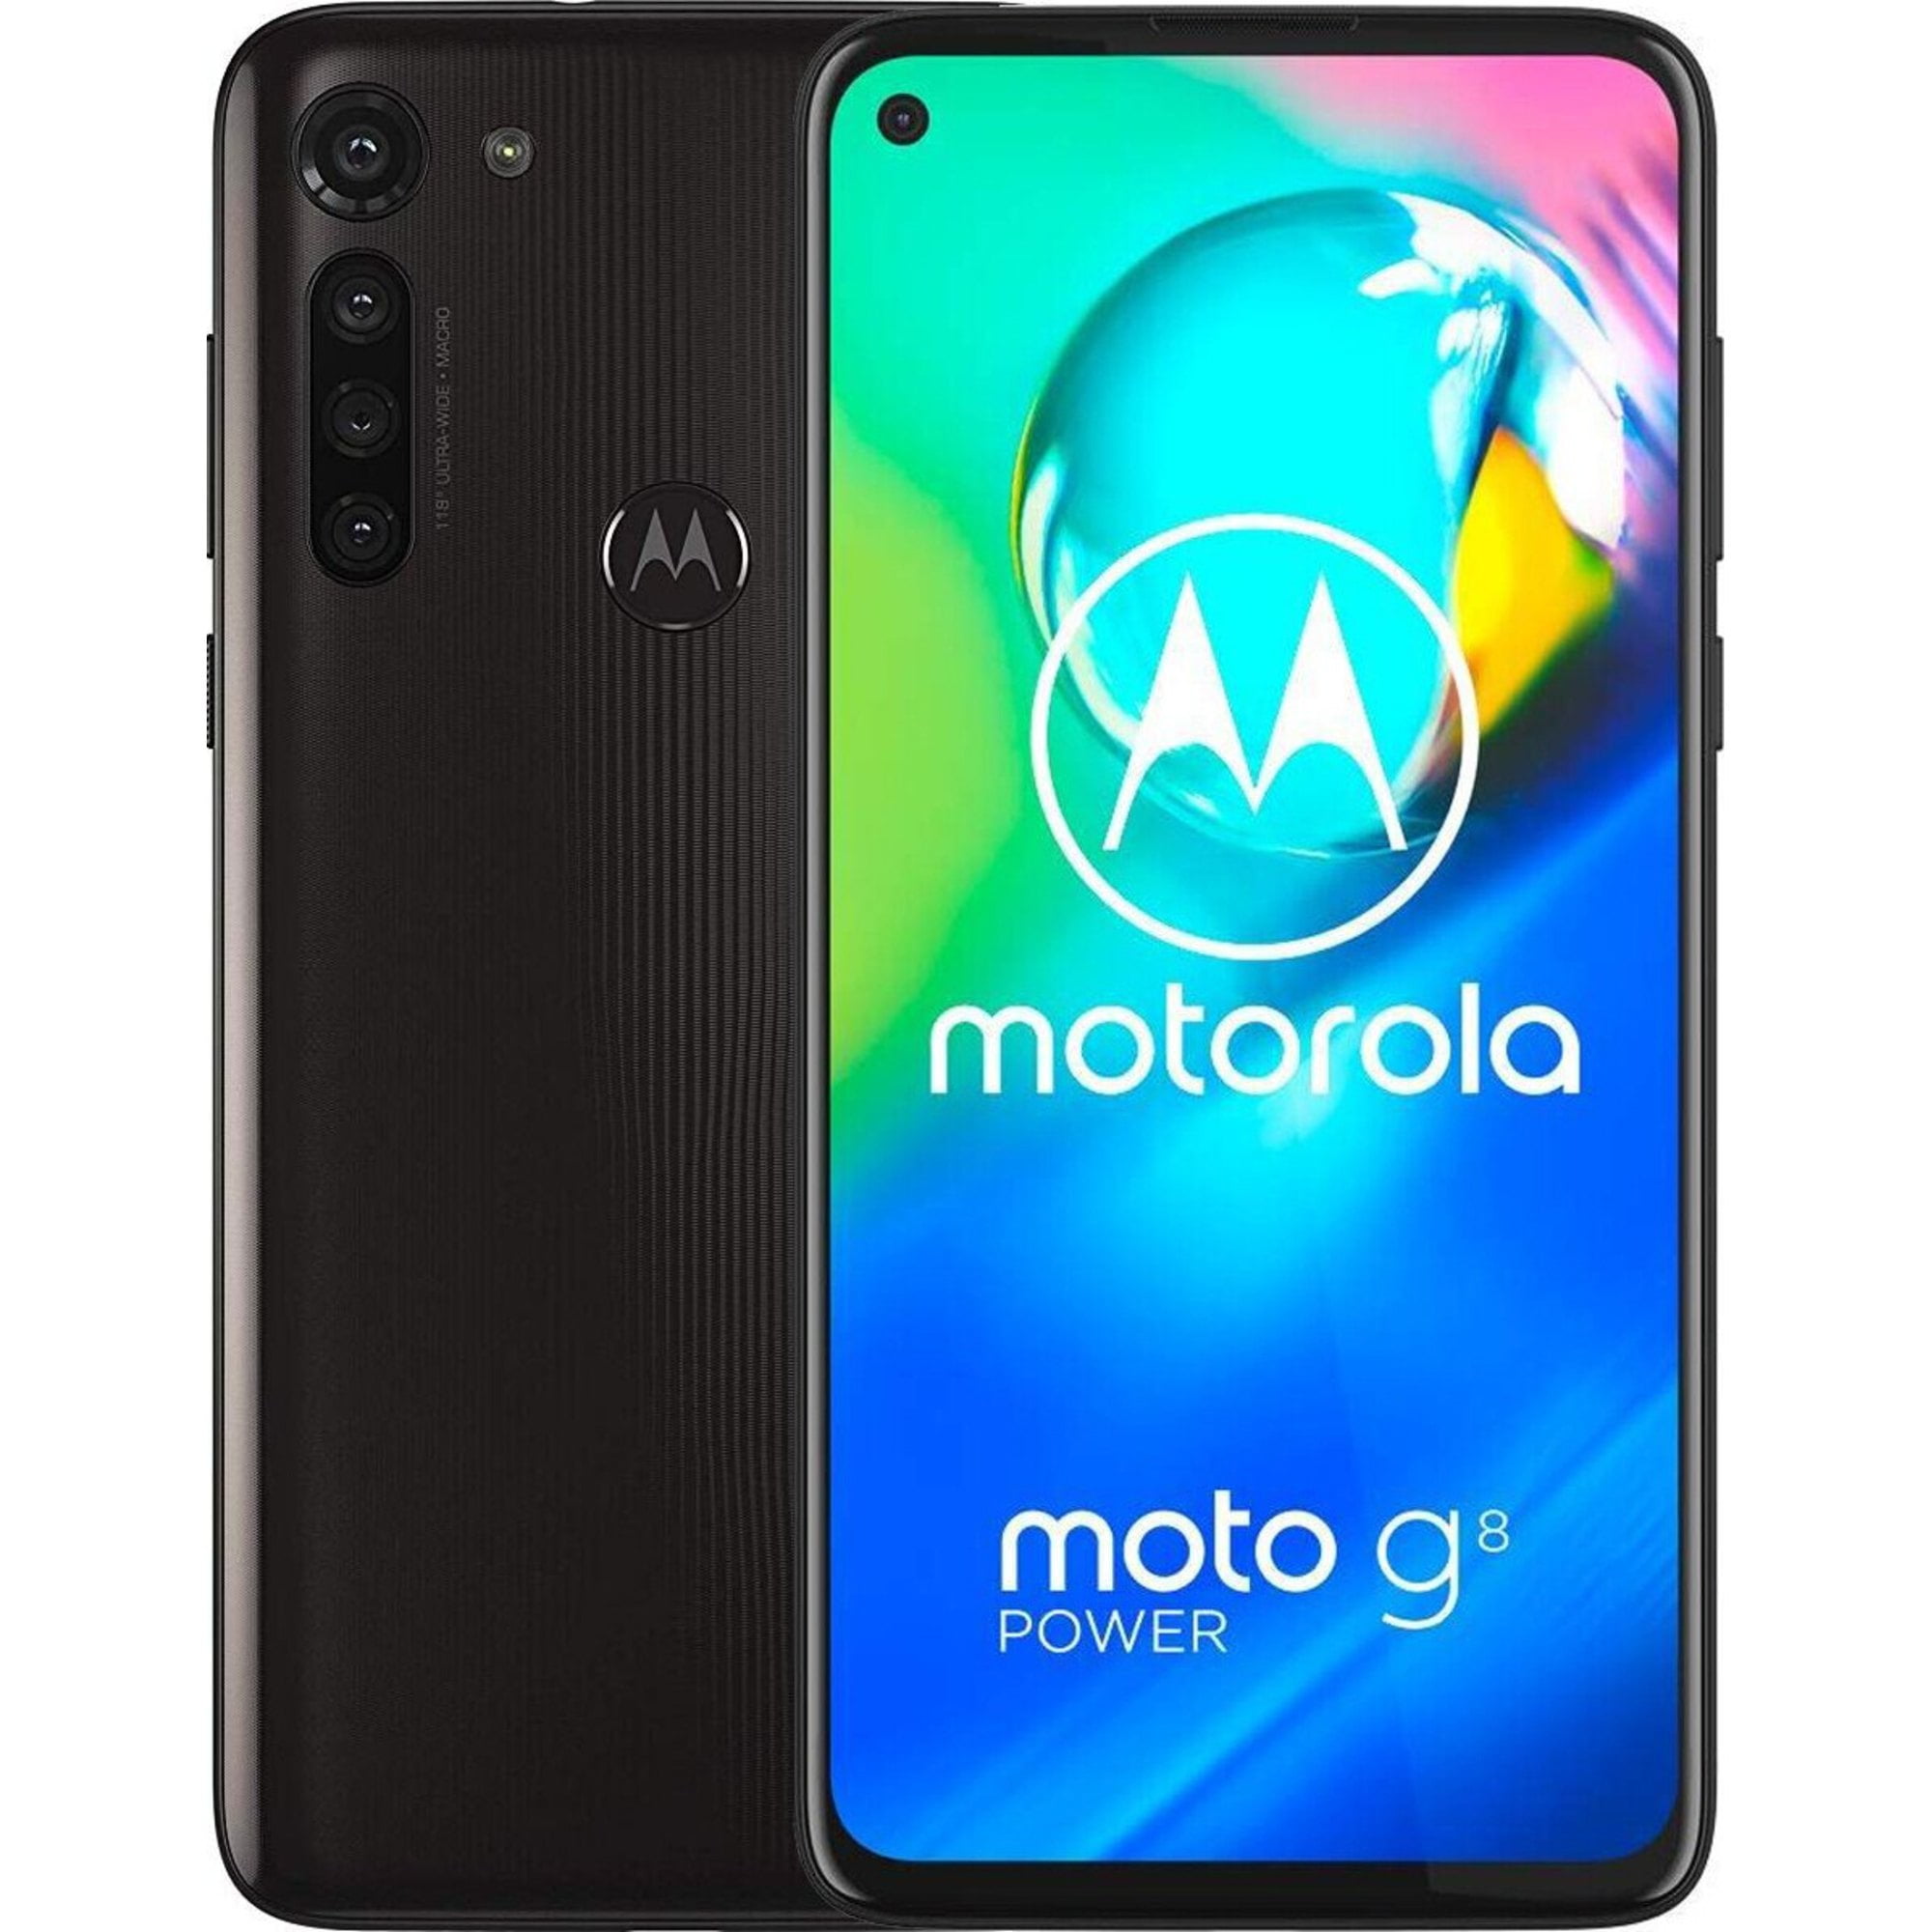 patrouille kapsel emulsie Restored Motorola Moto G8 Power XT2041-1 64GB Hybrid Dual SIM GSM Unlocked  Android SmartPhone - Smoke Black (Refurbished) - Walmart.com